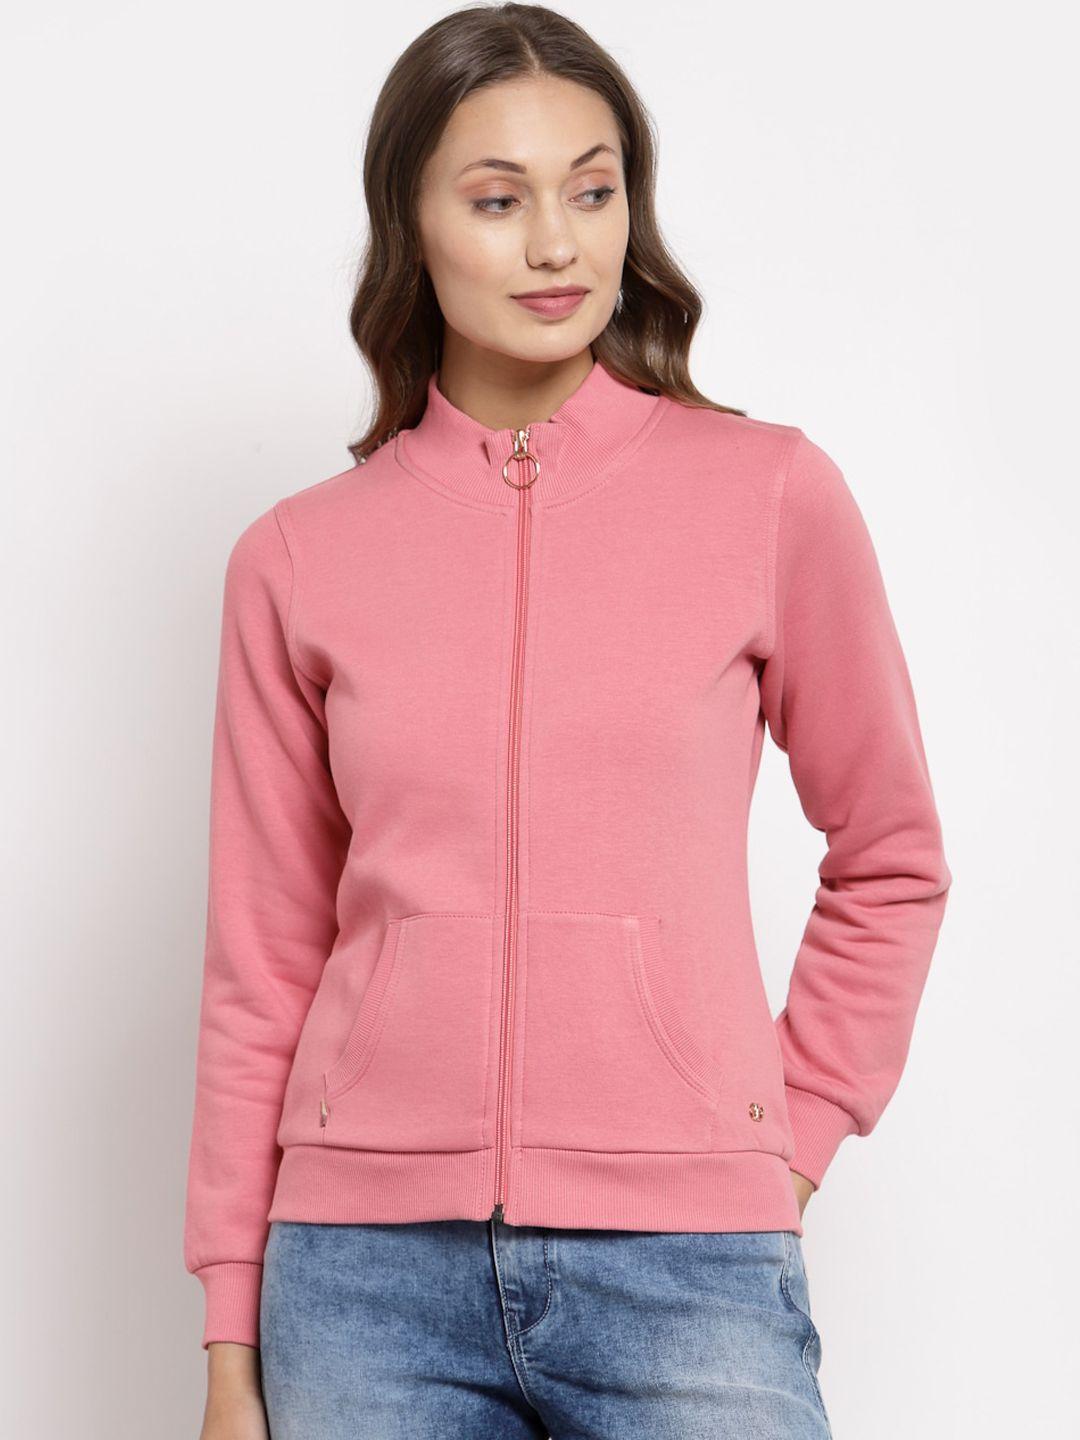 juelle women pink sweatshirt